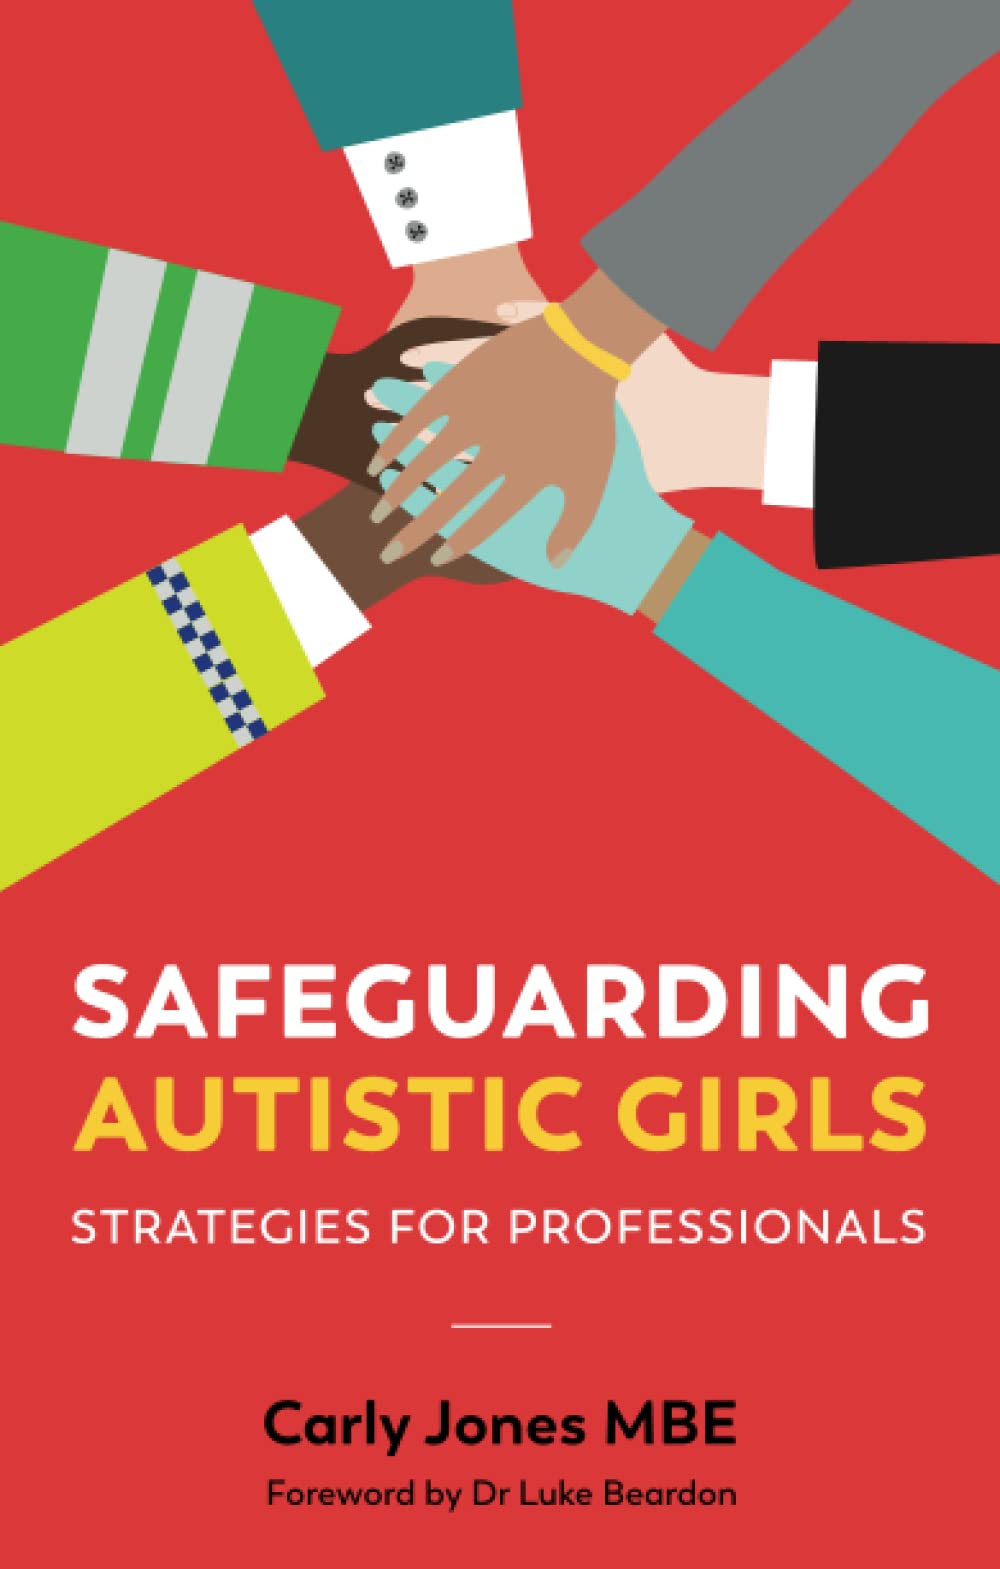 Safeguarding autistic girls